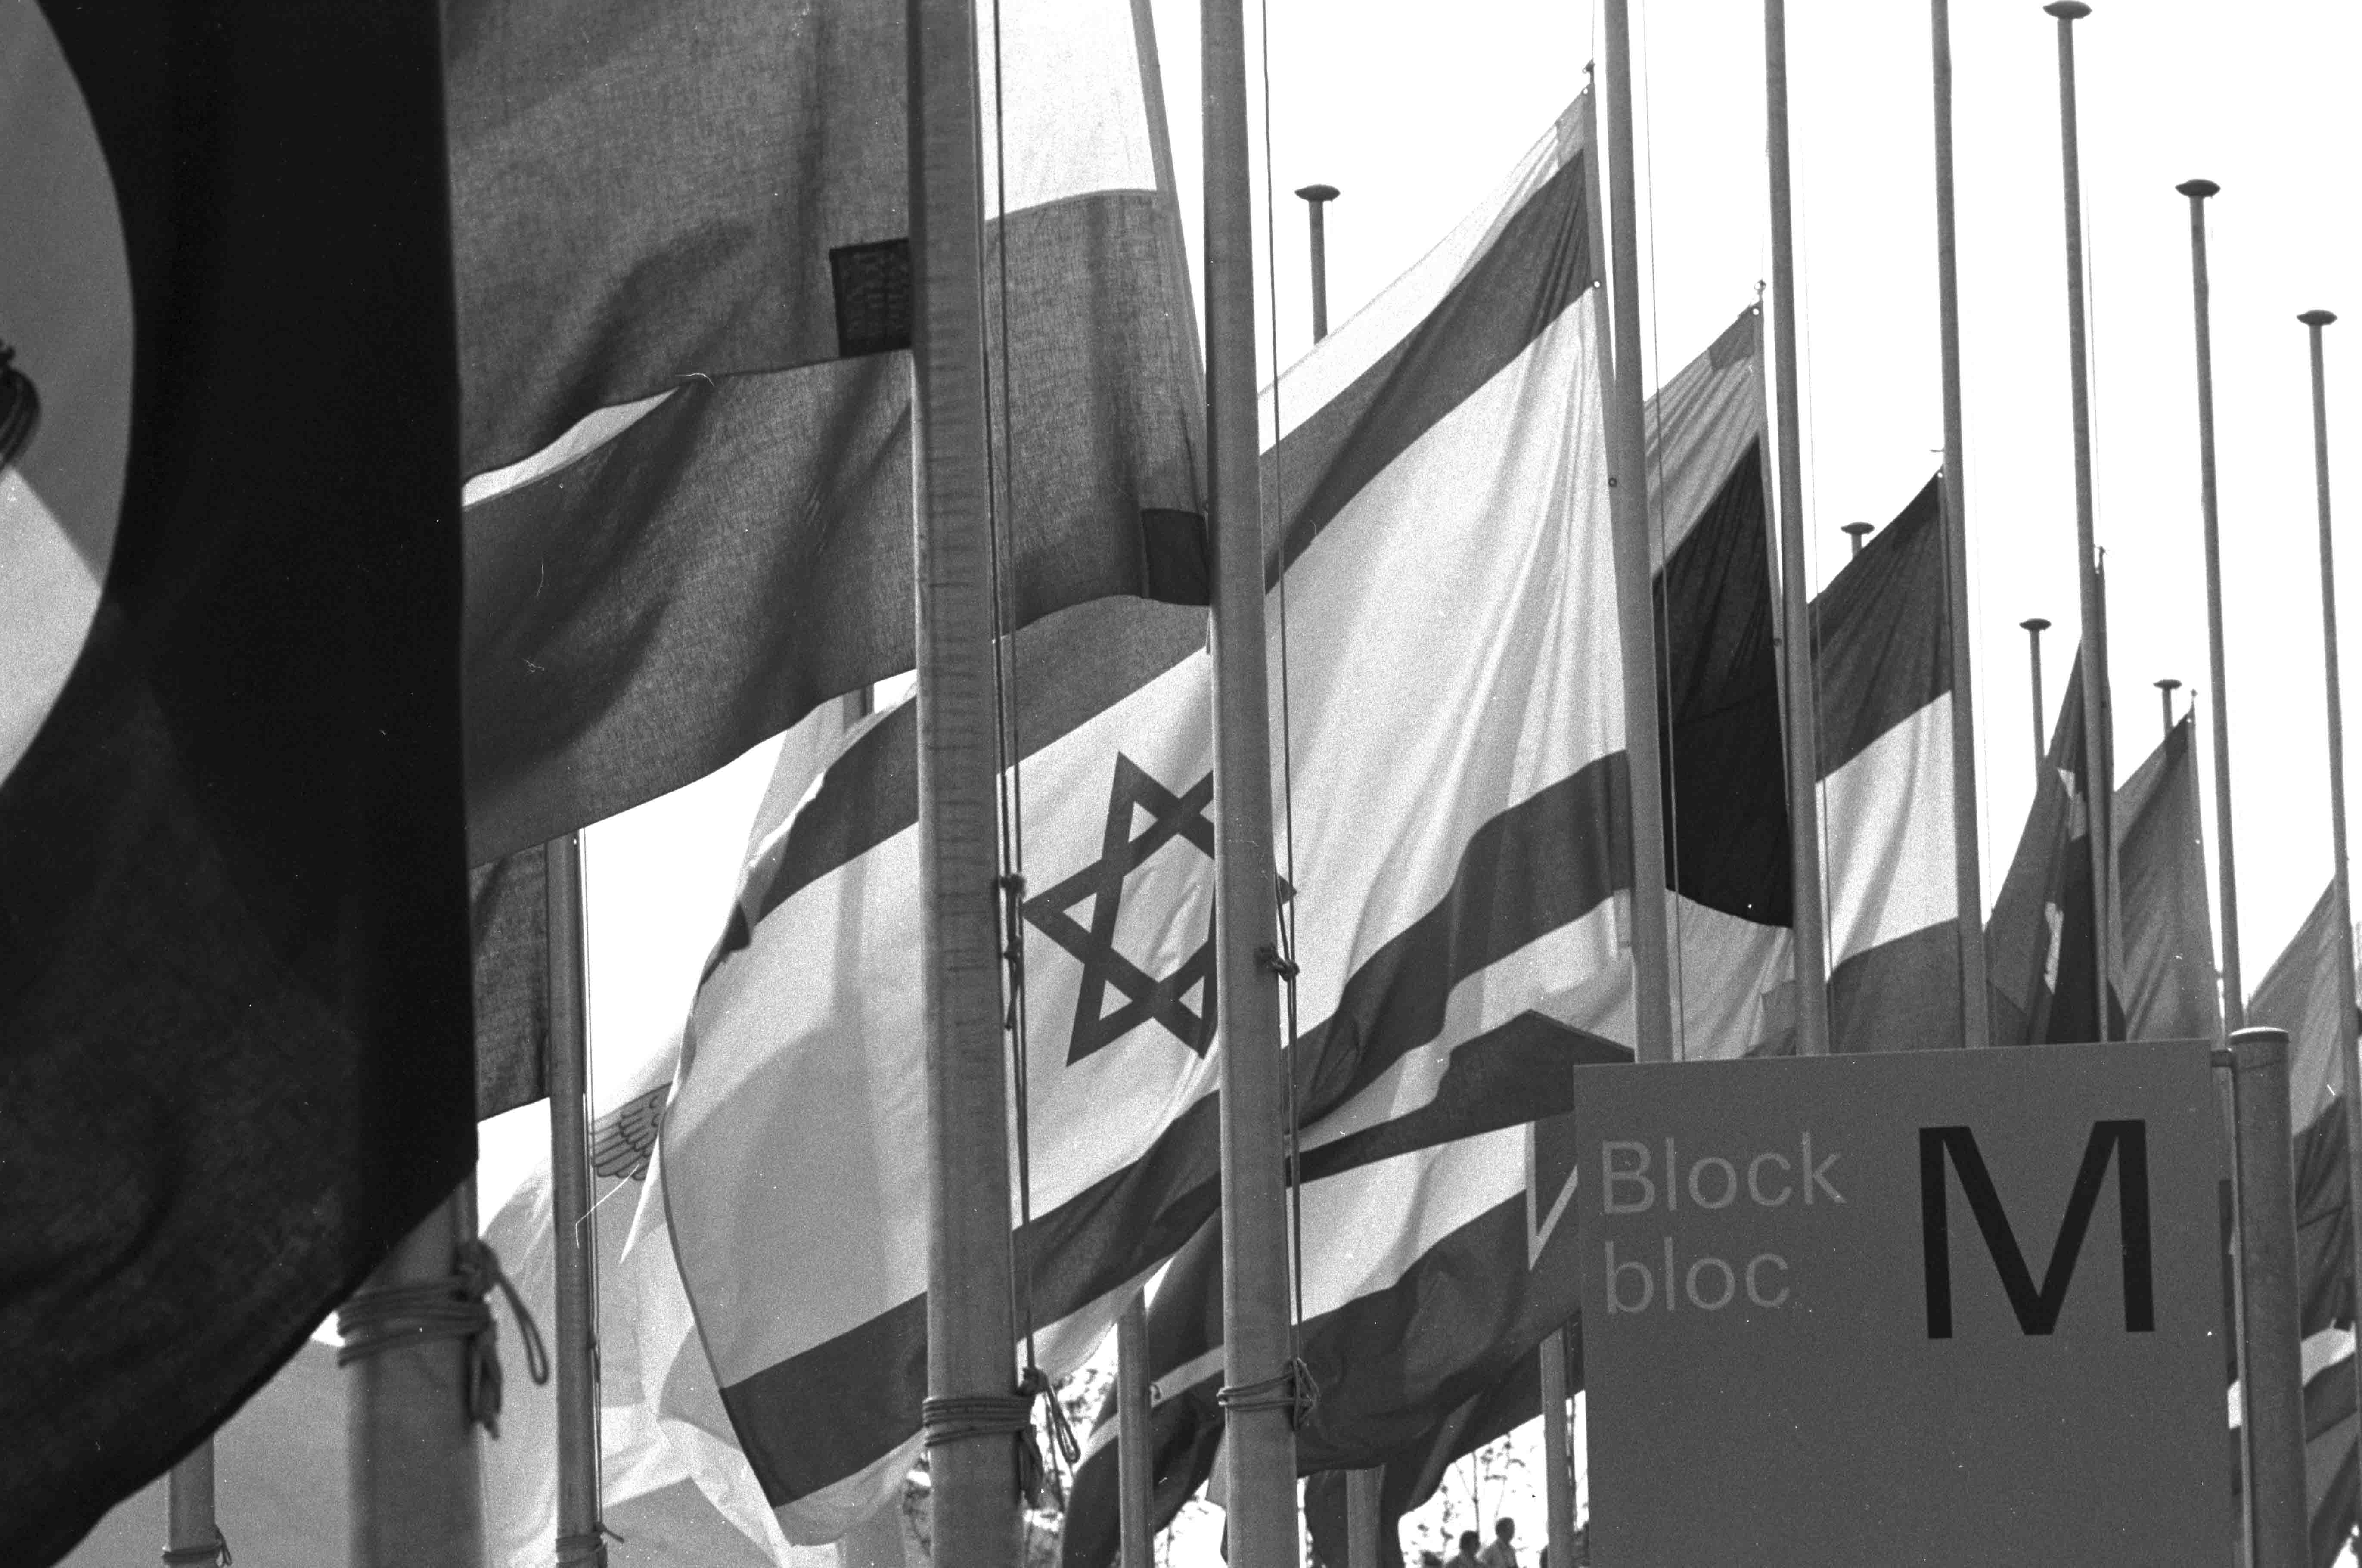 The Israeli flag raised at half mast after the Munich Olympic terrorist attacks